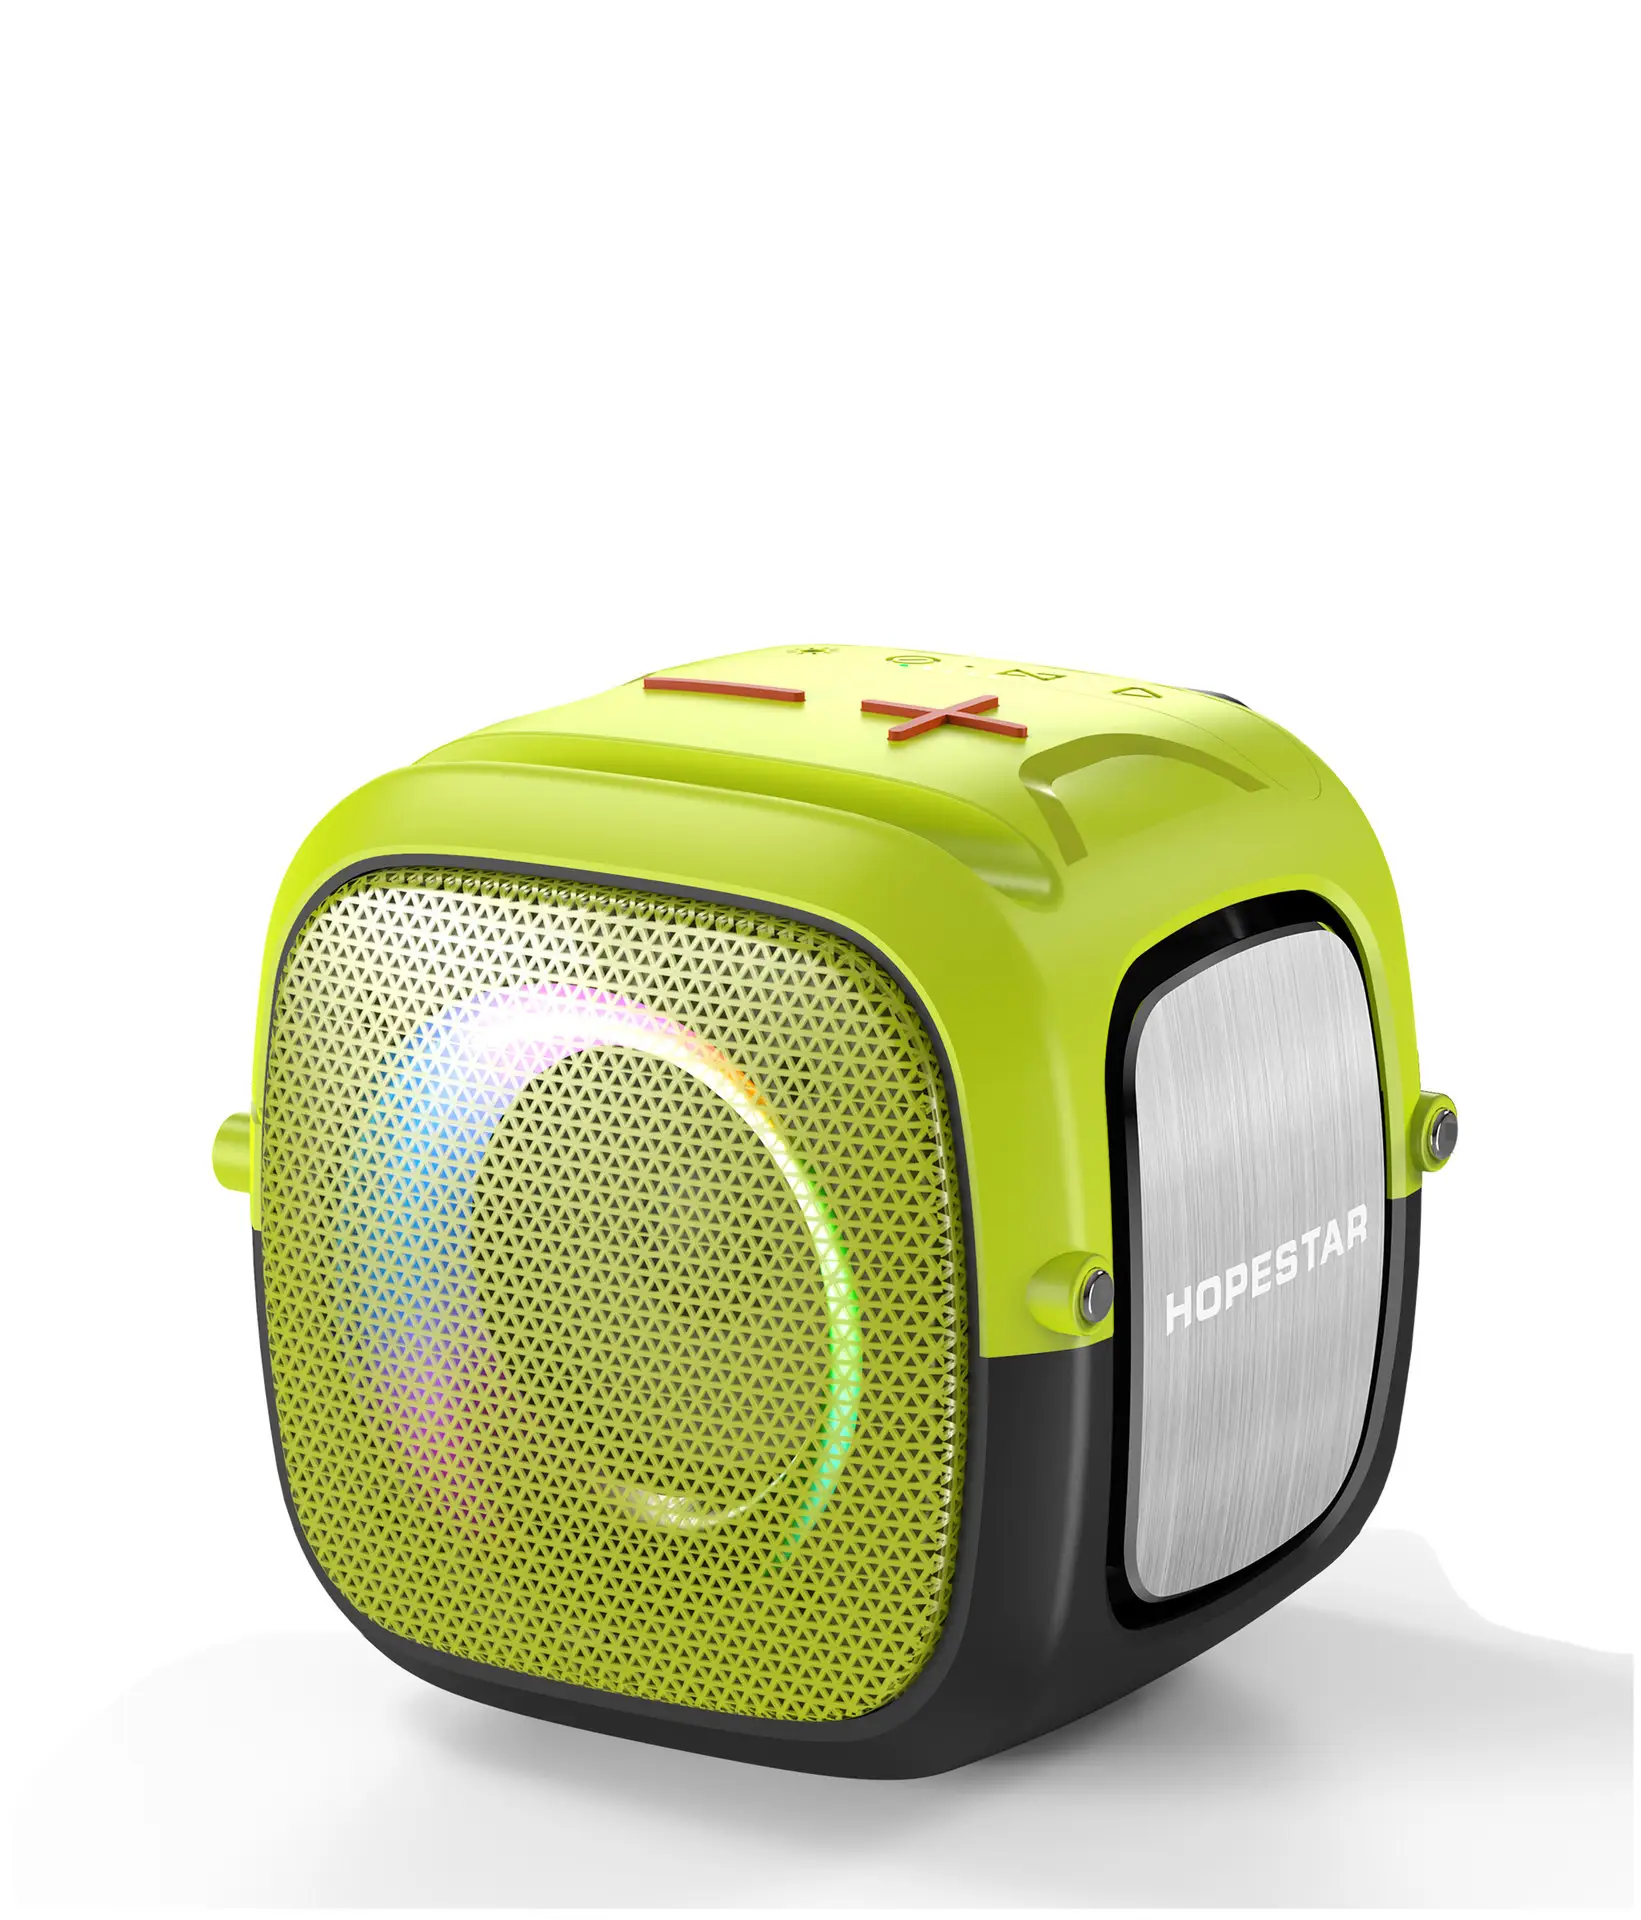 KOZH HOPFSTAR speaker Bluetooth nirkabel, lampu warna-warni portabel luar ruangan, Bass berat dengan Radio FM